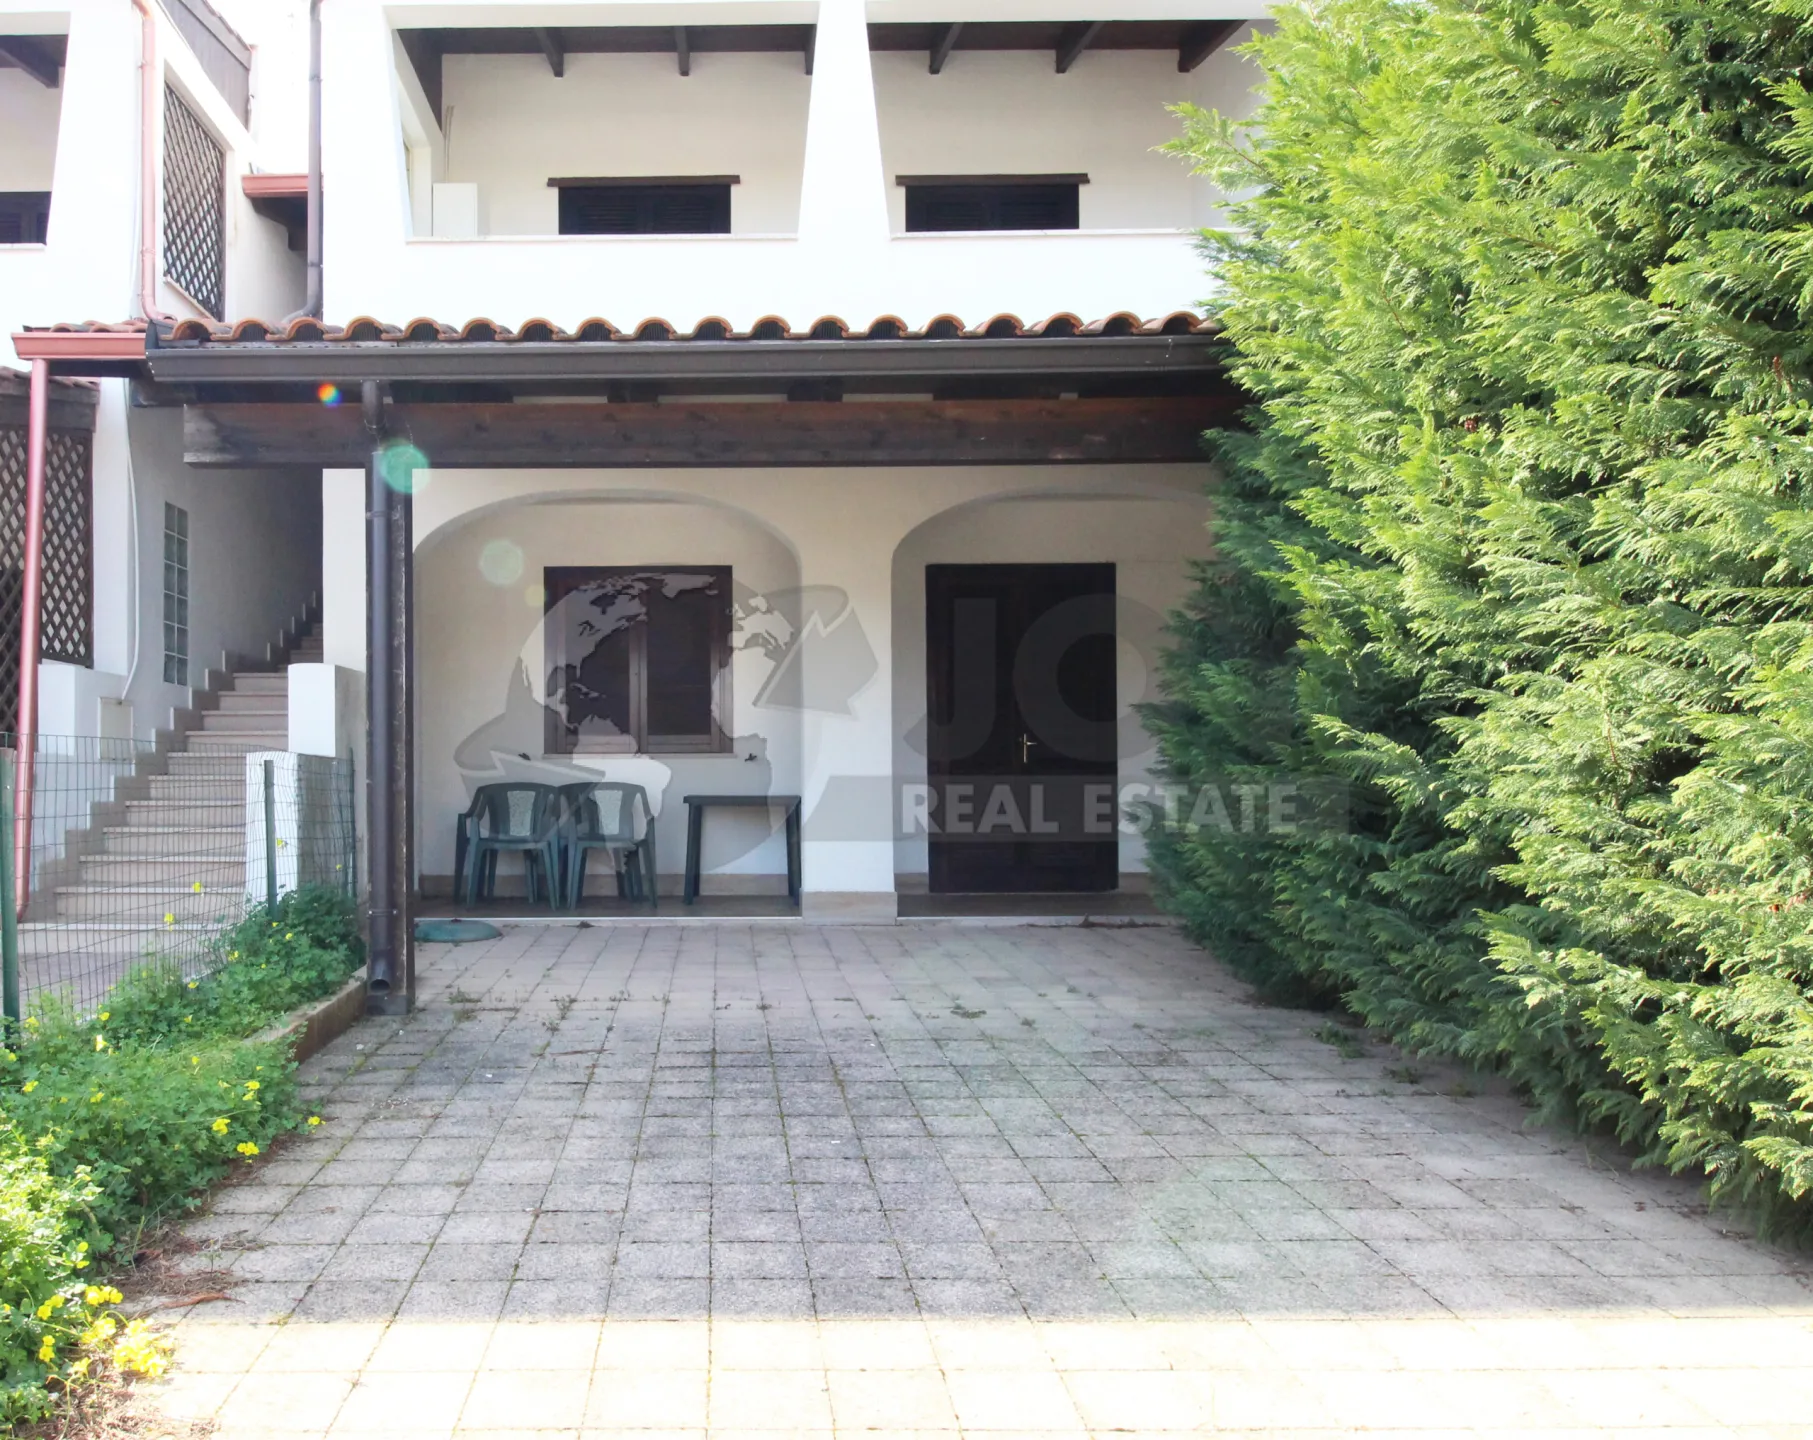 Immagine per Villa in vendita a Melendugno via Sp 145